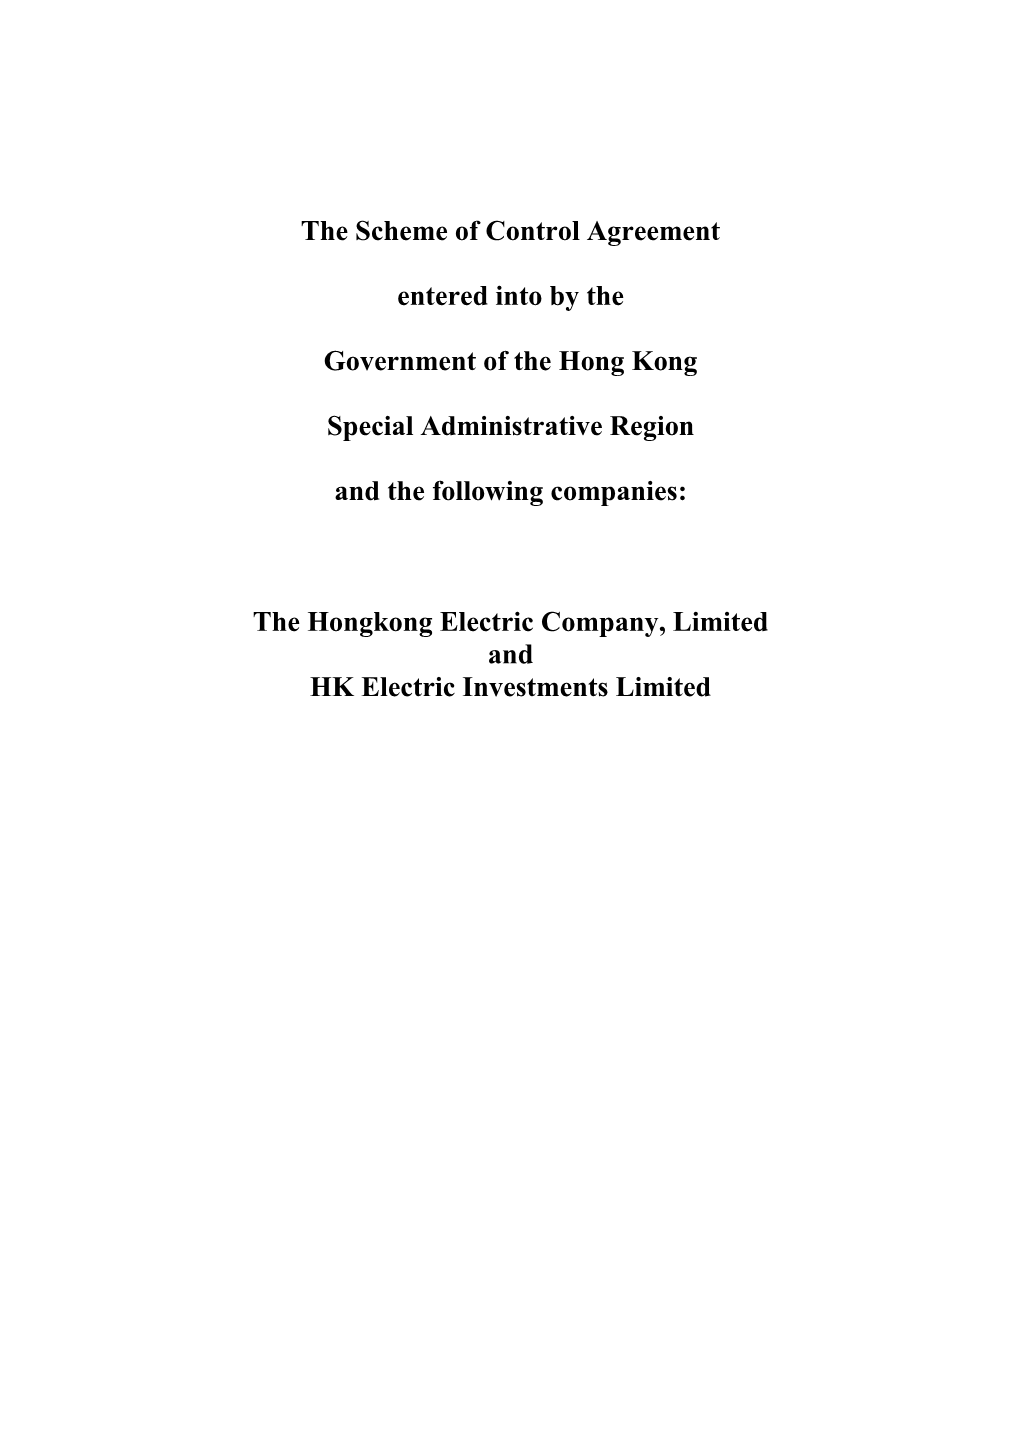 Scheme of Control Agreement